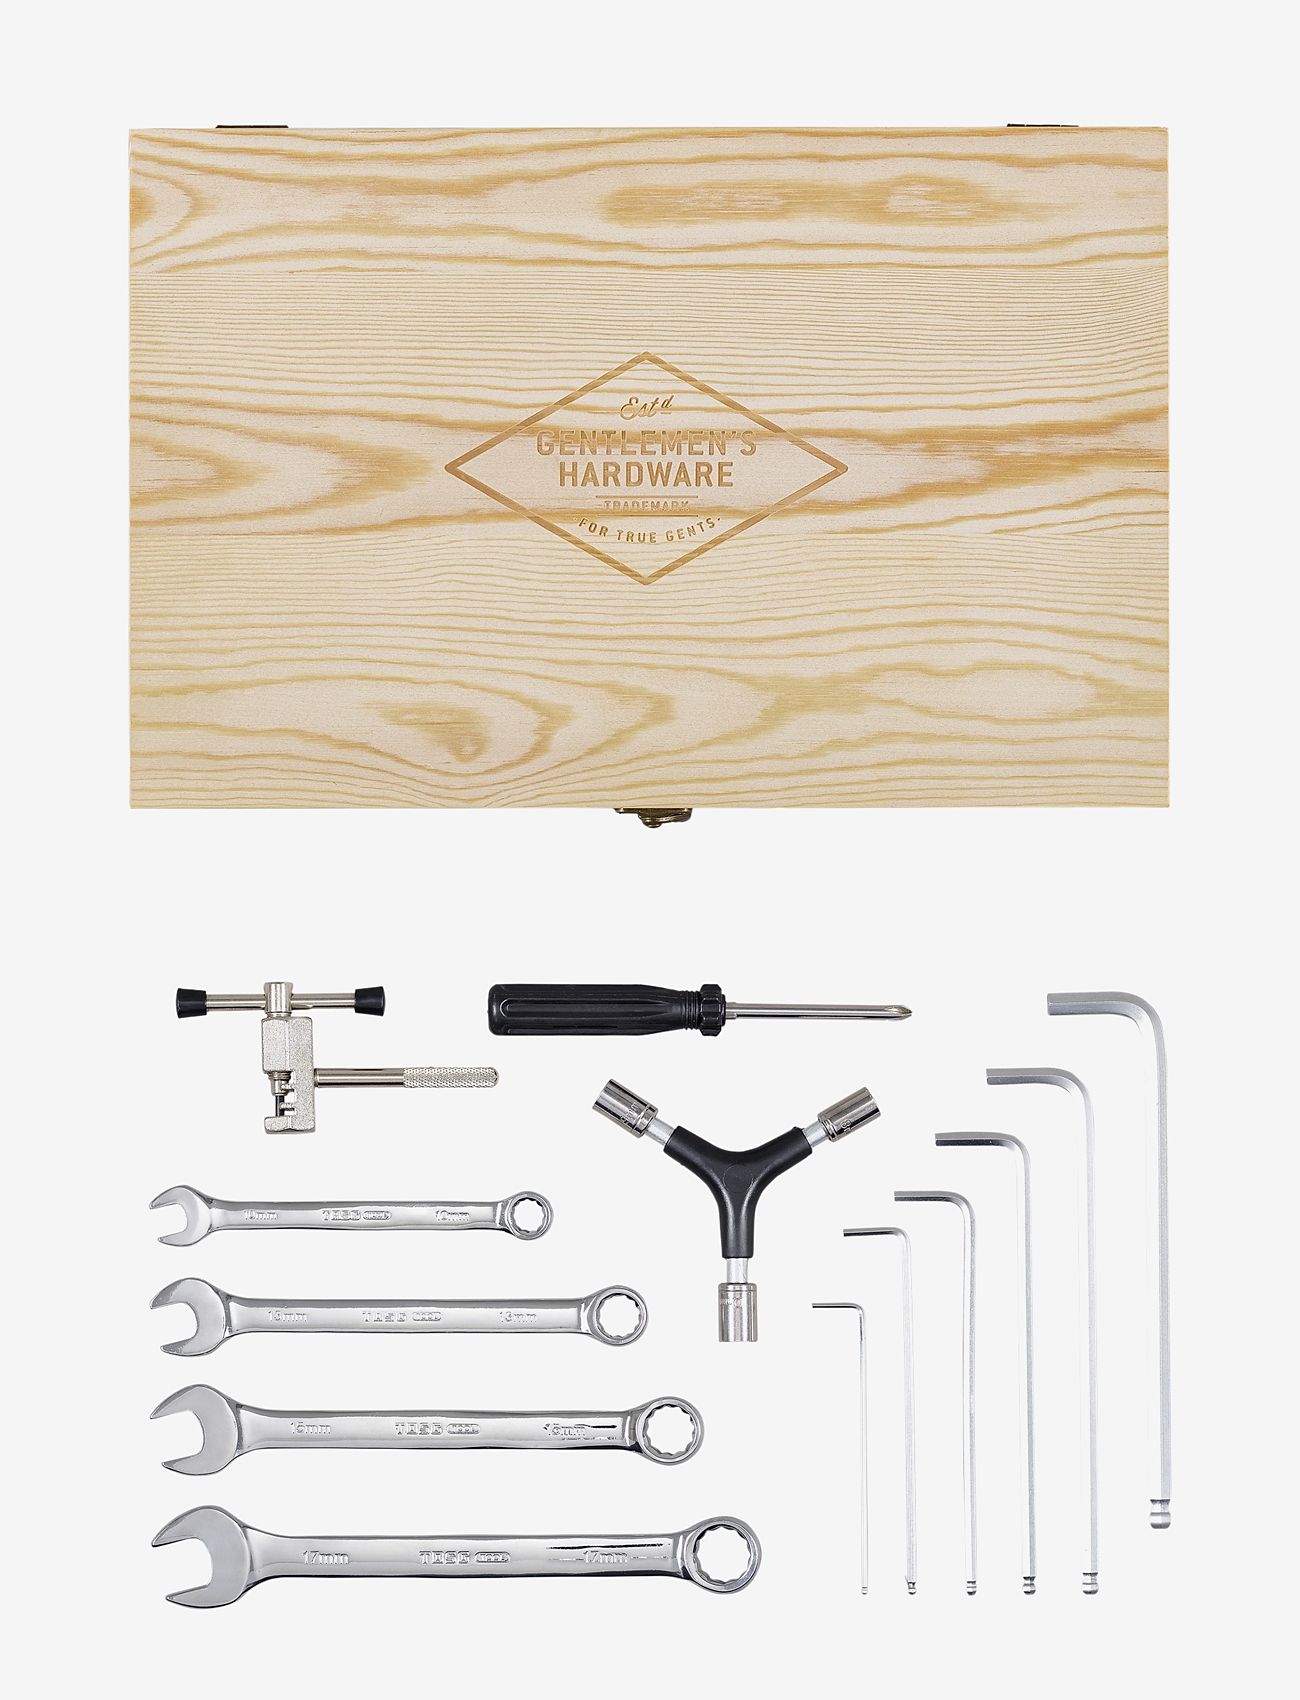 Gentlemen's Hardware - Bicycle Tool Kit in Wooden Box - multi-tools - brown - 1